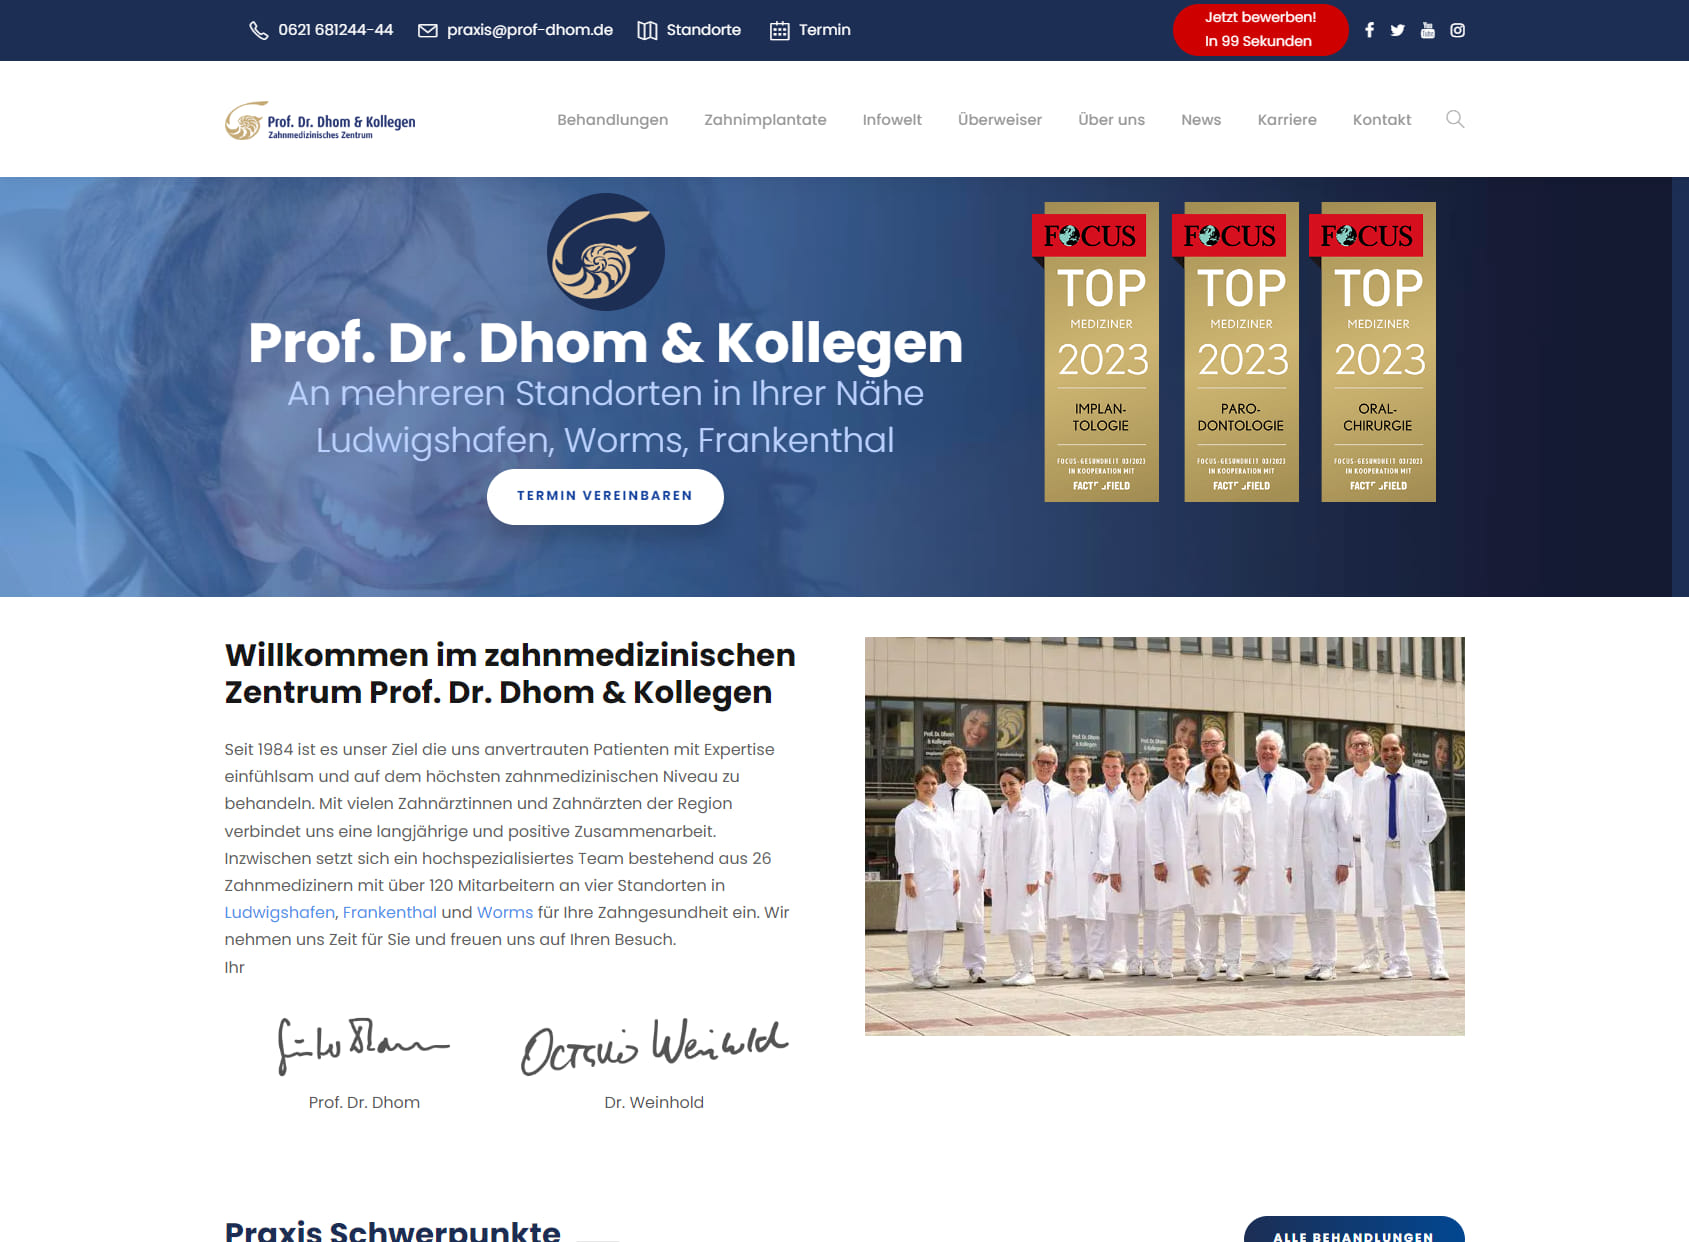 Prof. Dr. Dhom & colleagues MVZ GmbH